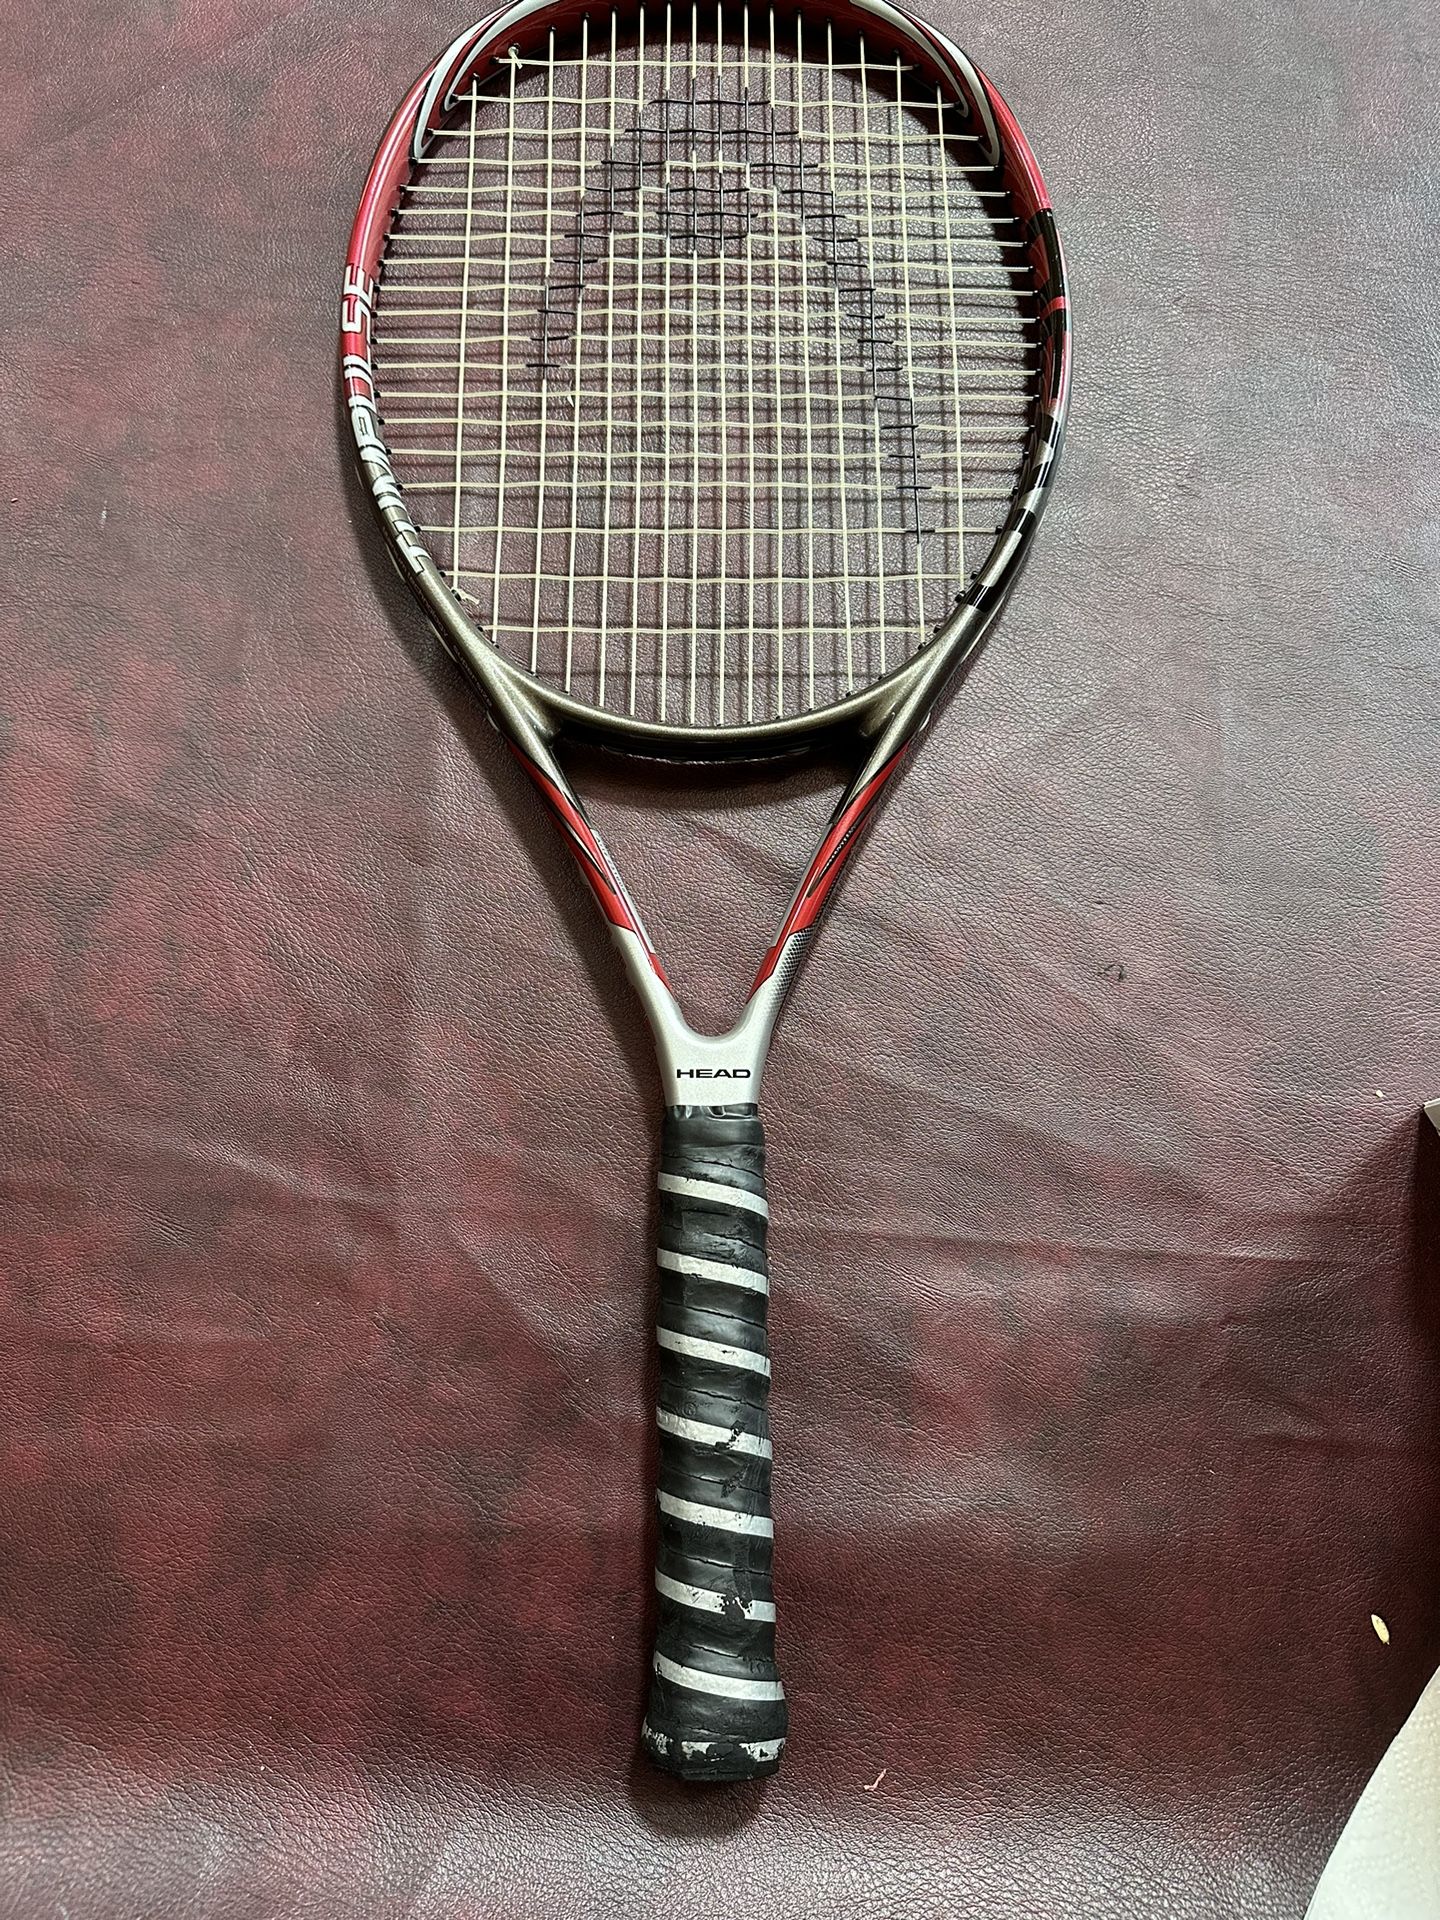 Head Ti.impulse tatanium technology tennis racket.